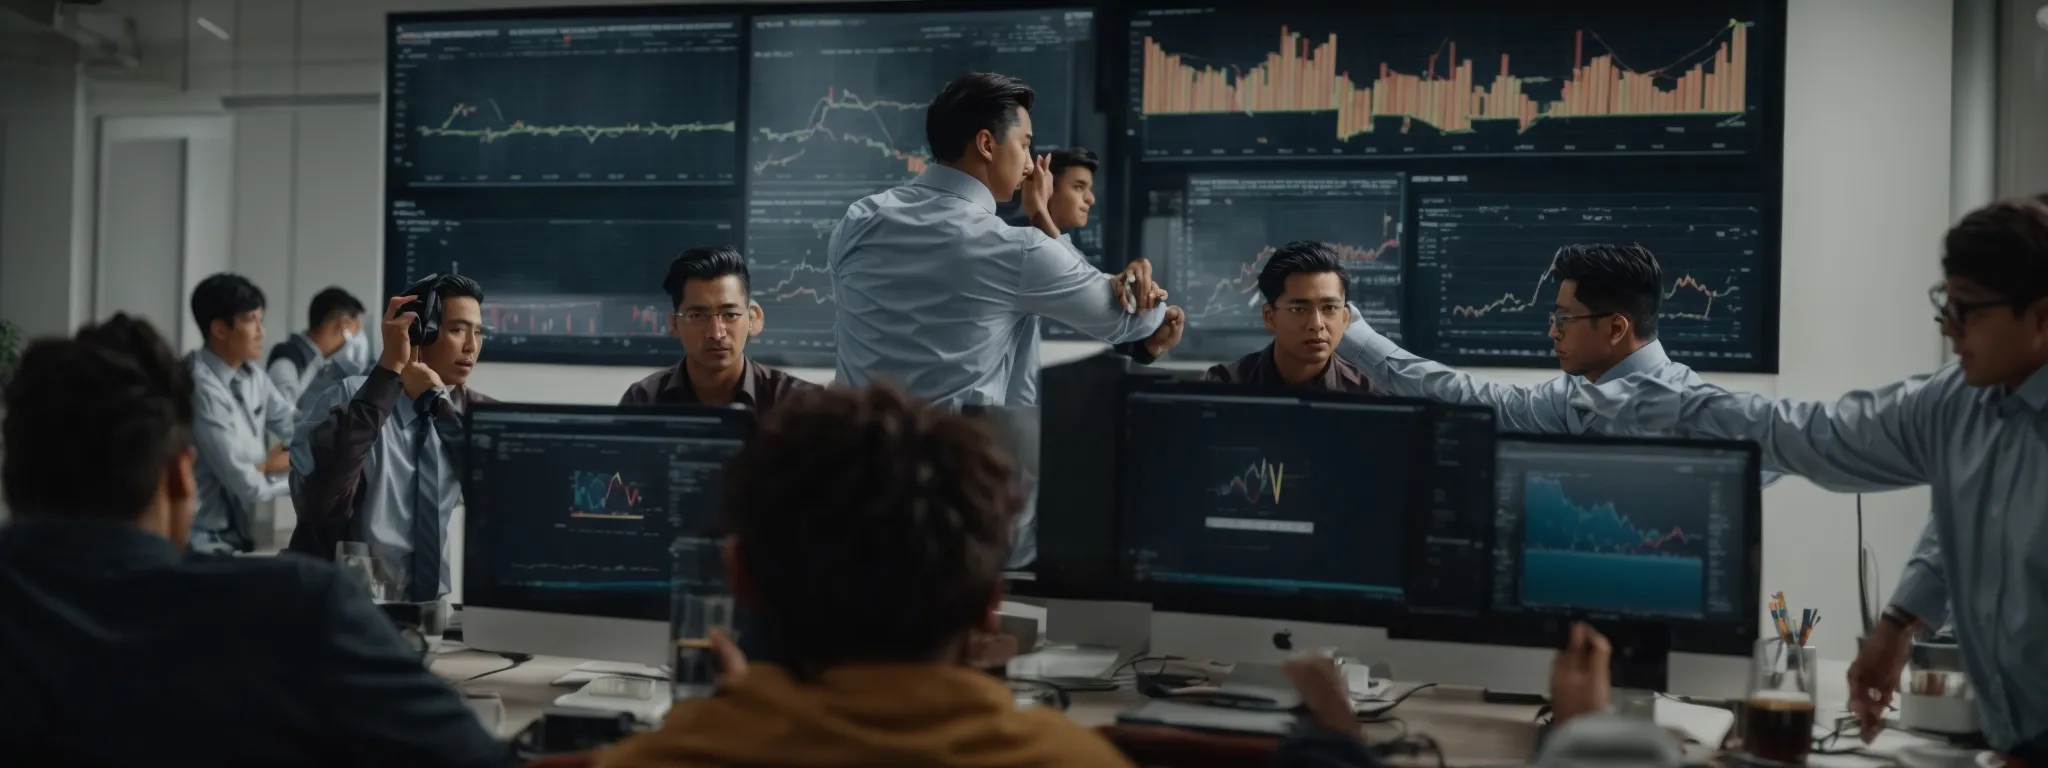 a team celebrates around a computer displaying rising analytics graphs, symbolizing digital marketing success.